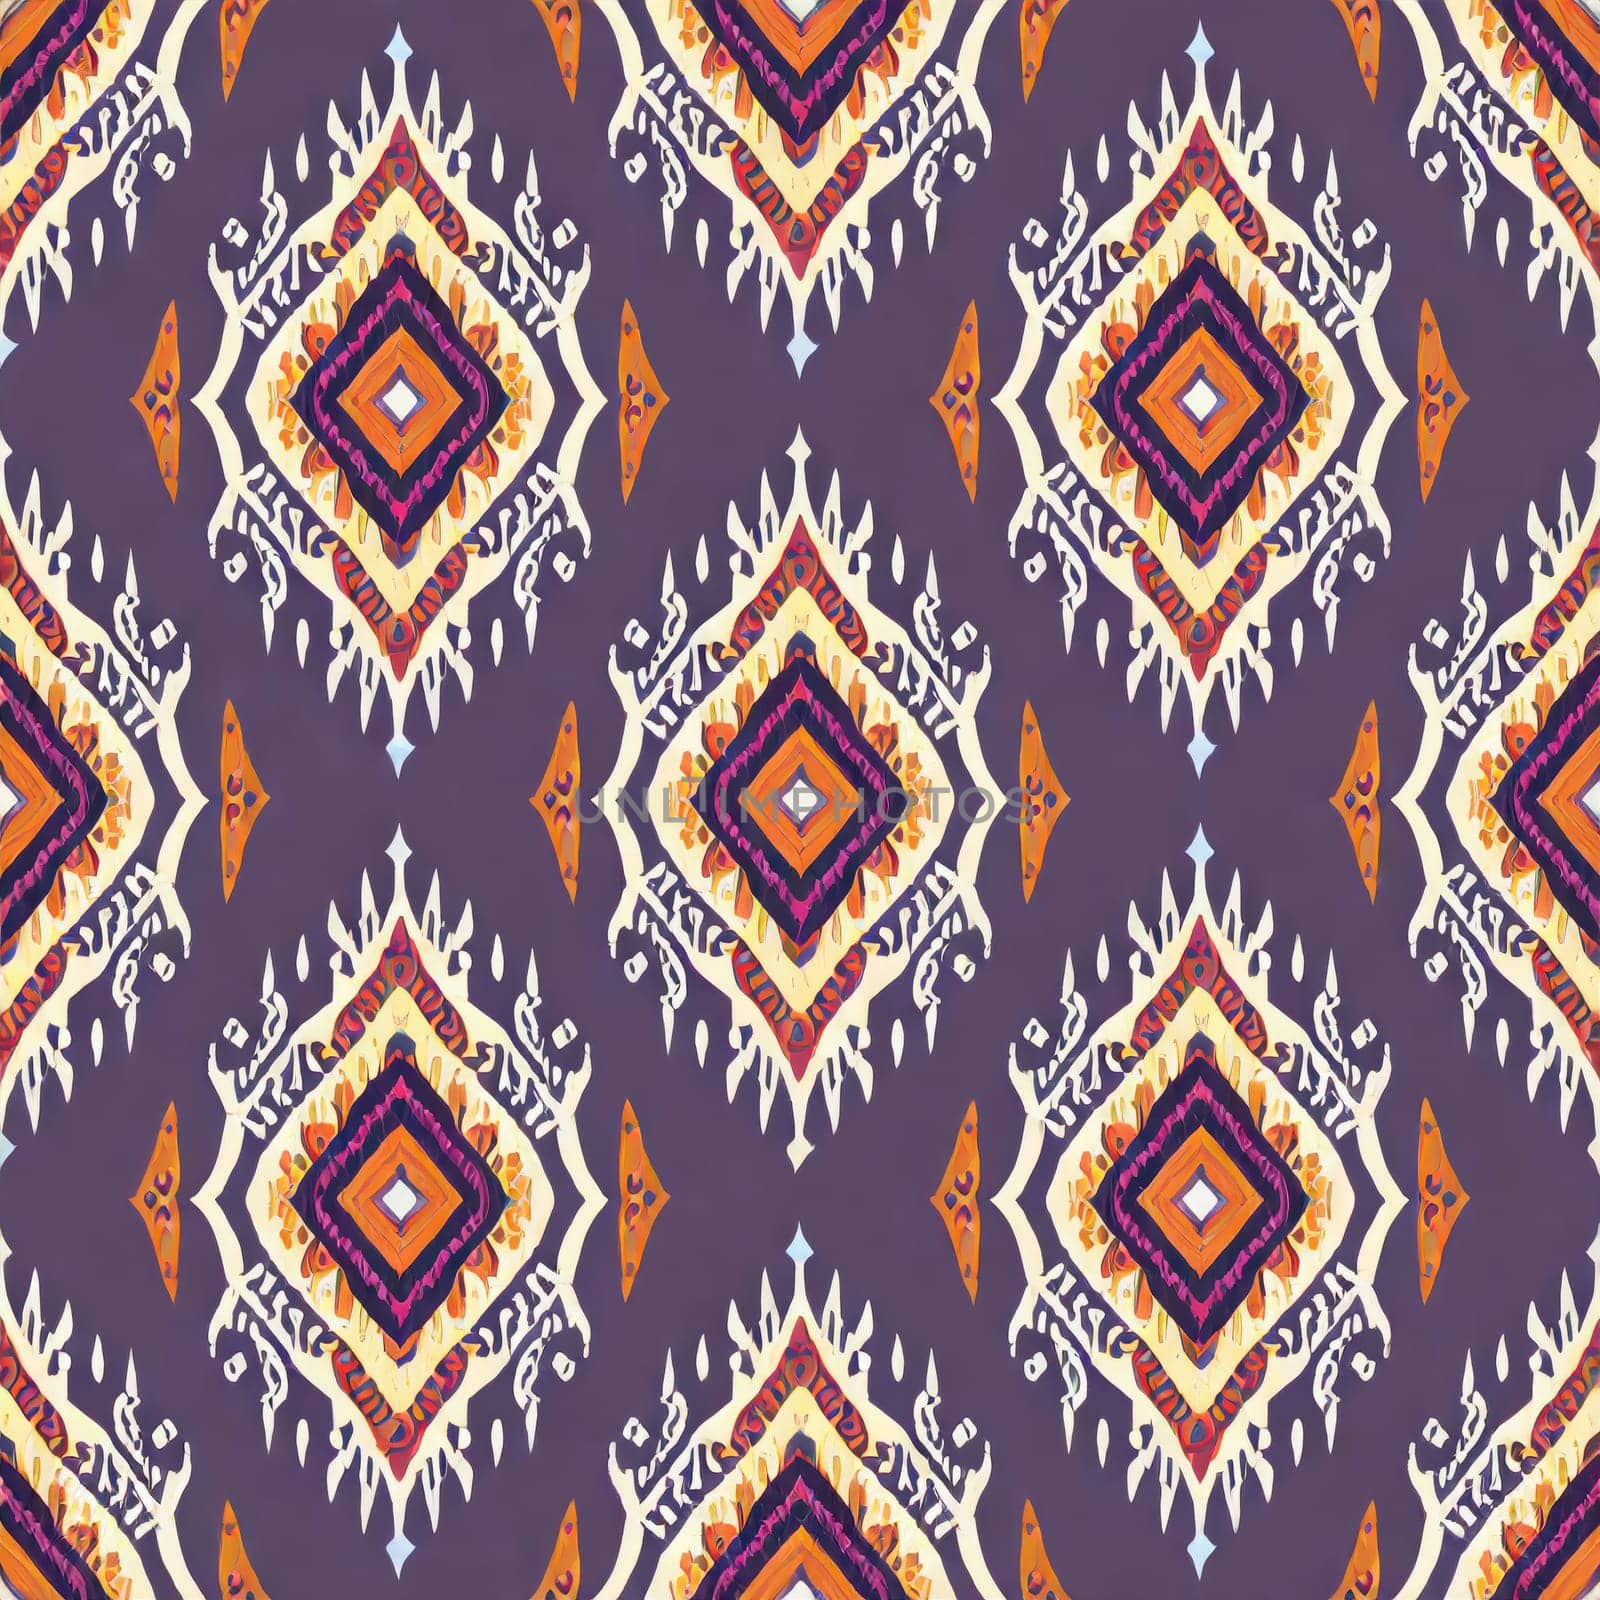 Digital seamless pattern etnic style block print batik